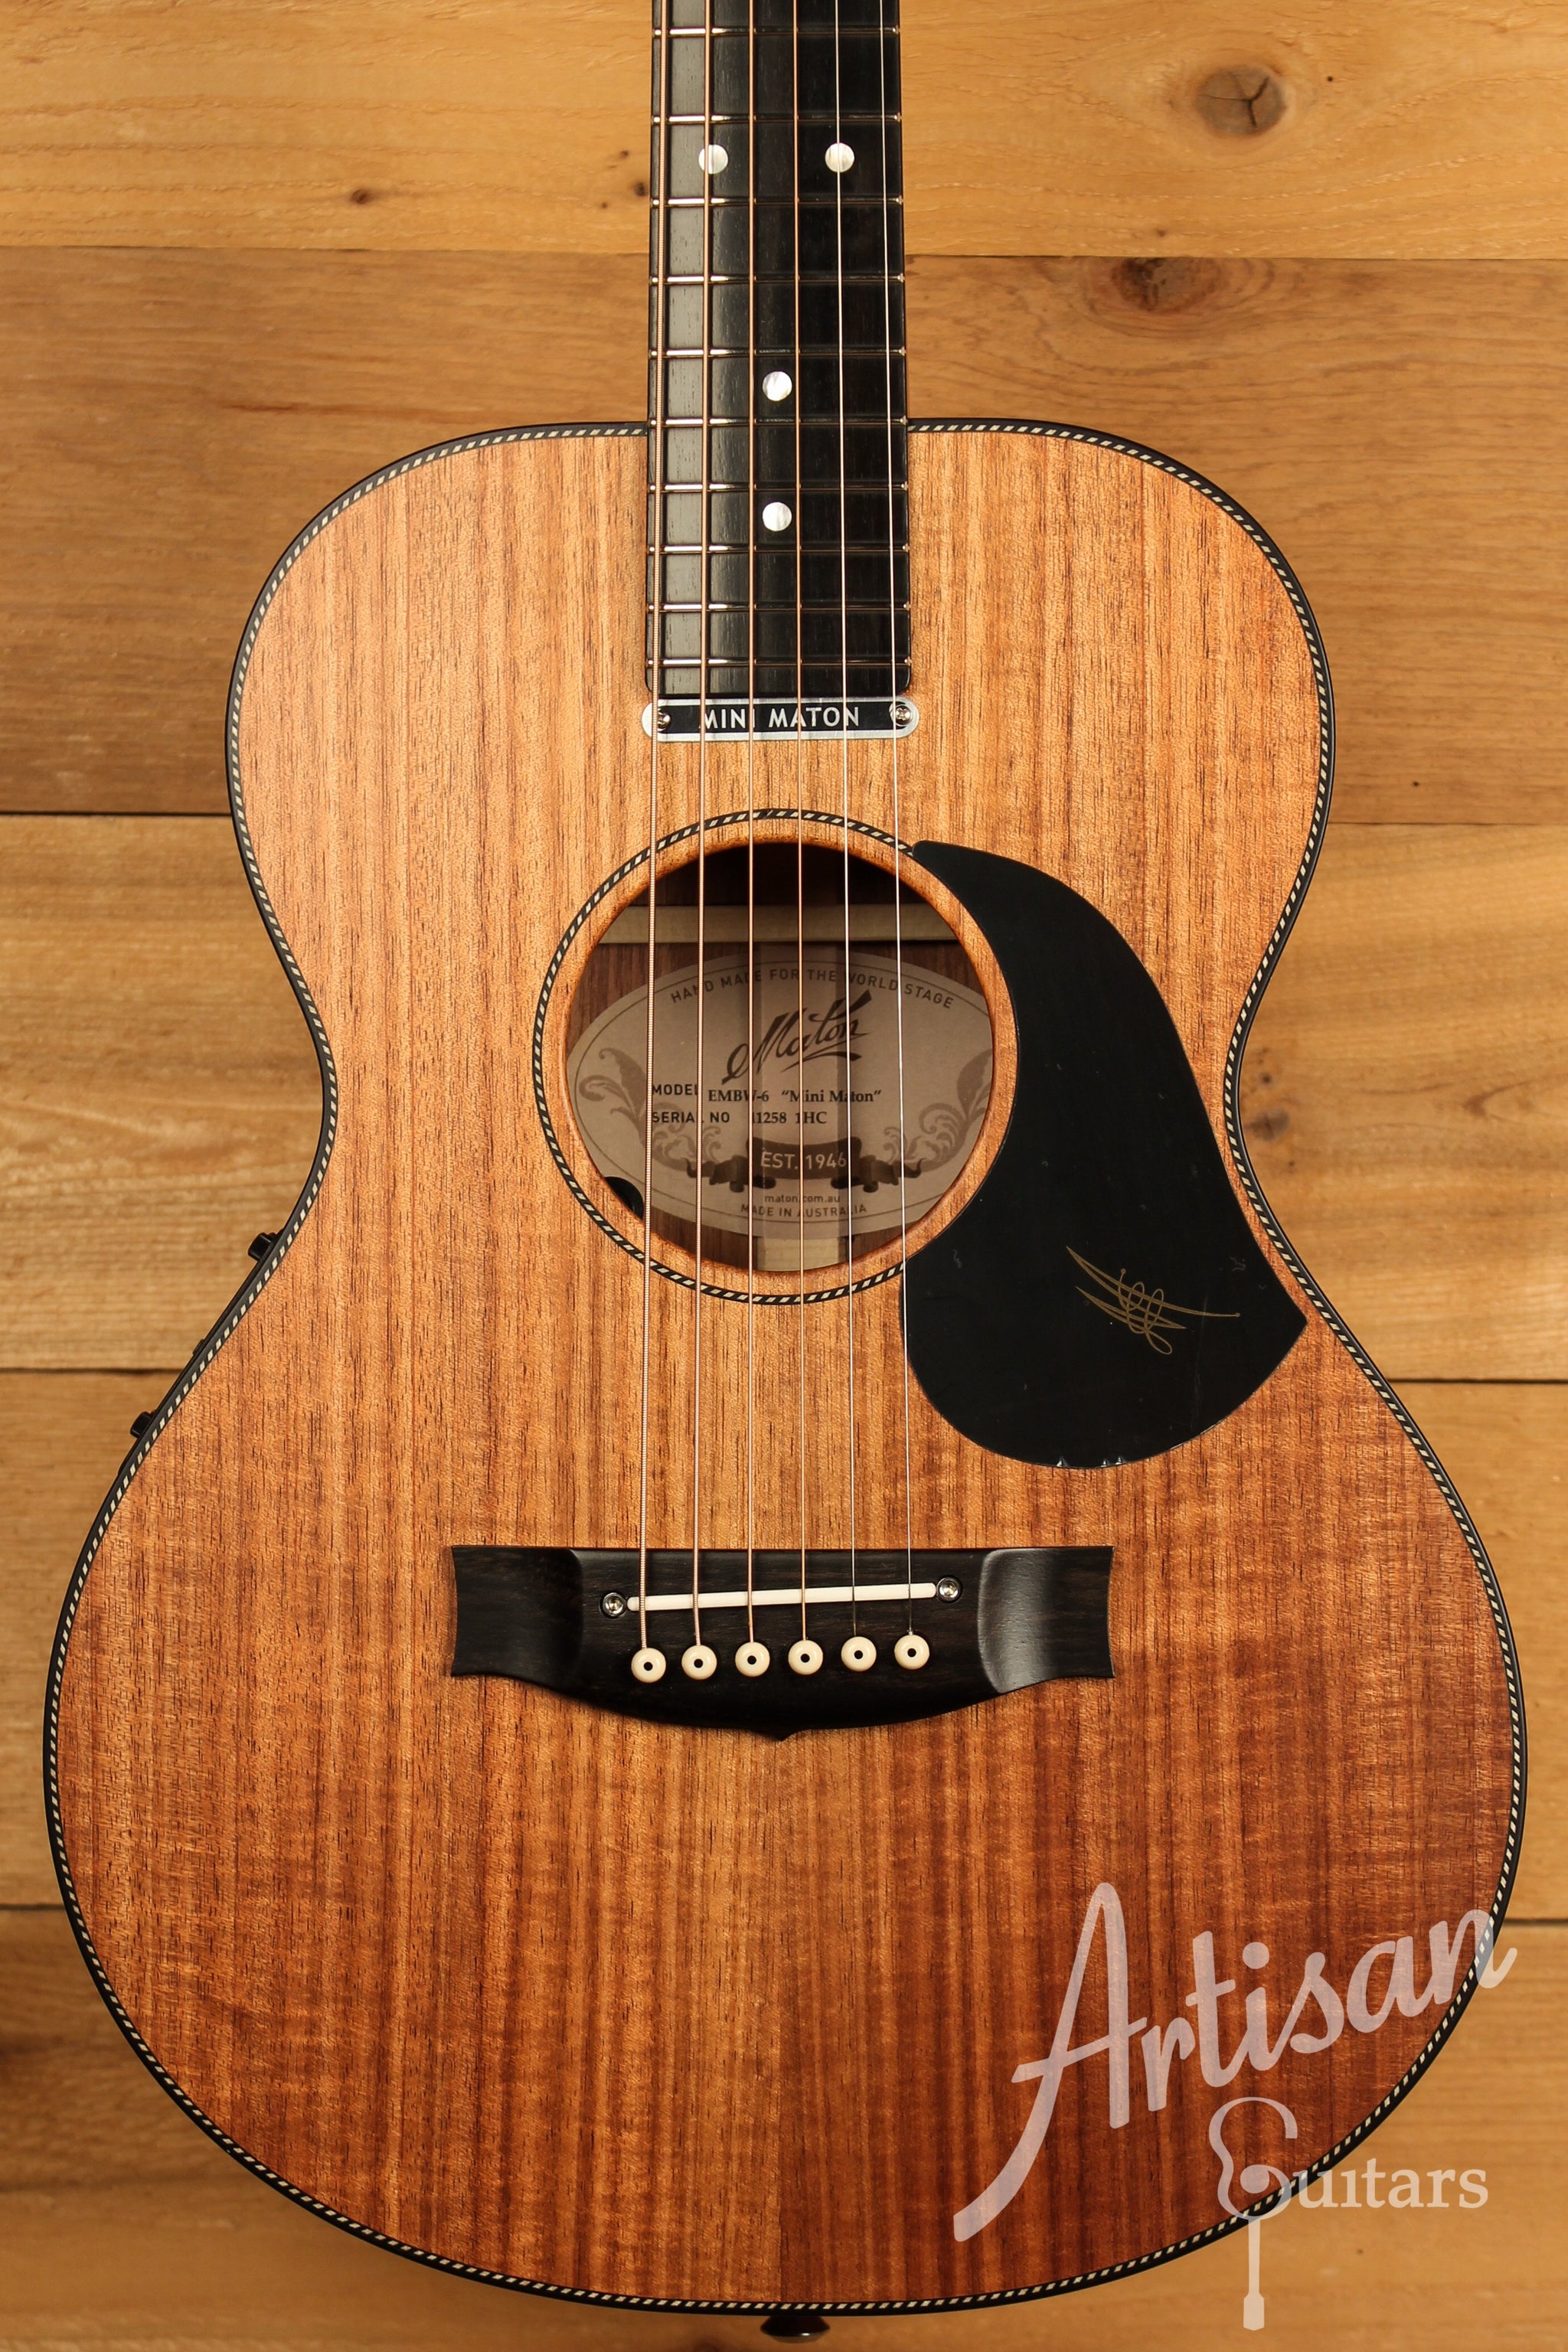 Maton EMBW6 Mini Guitar w/ Blackwood Top, Back & Sides and AP5 Pro Pickup System ID-12307 - Artisan Guitars